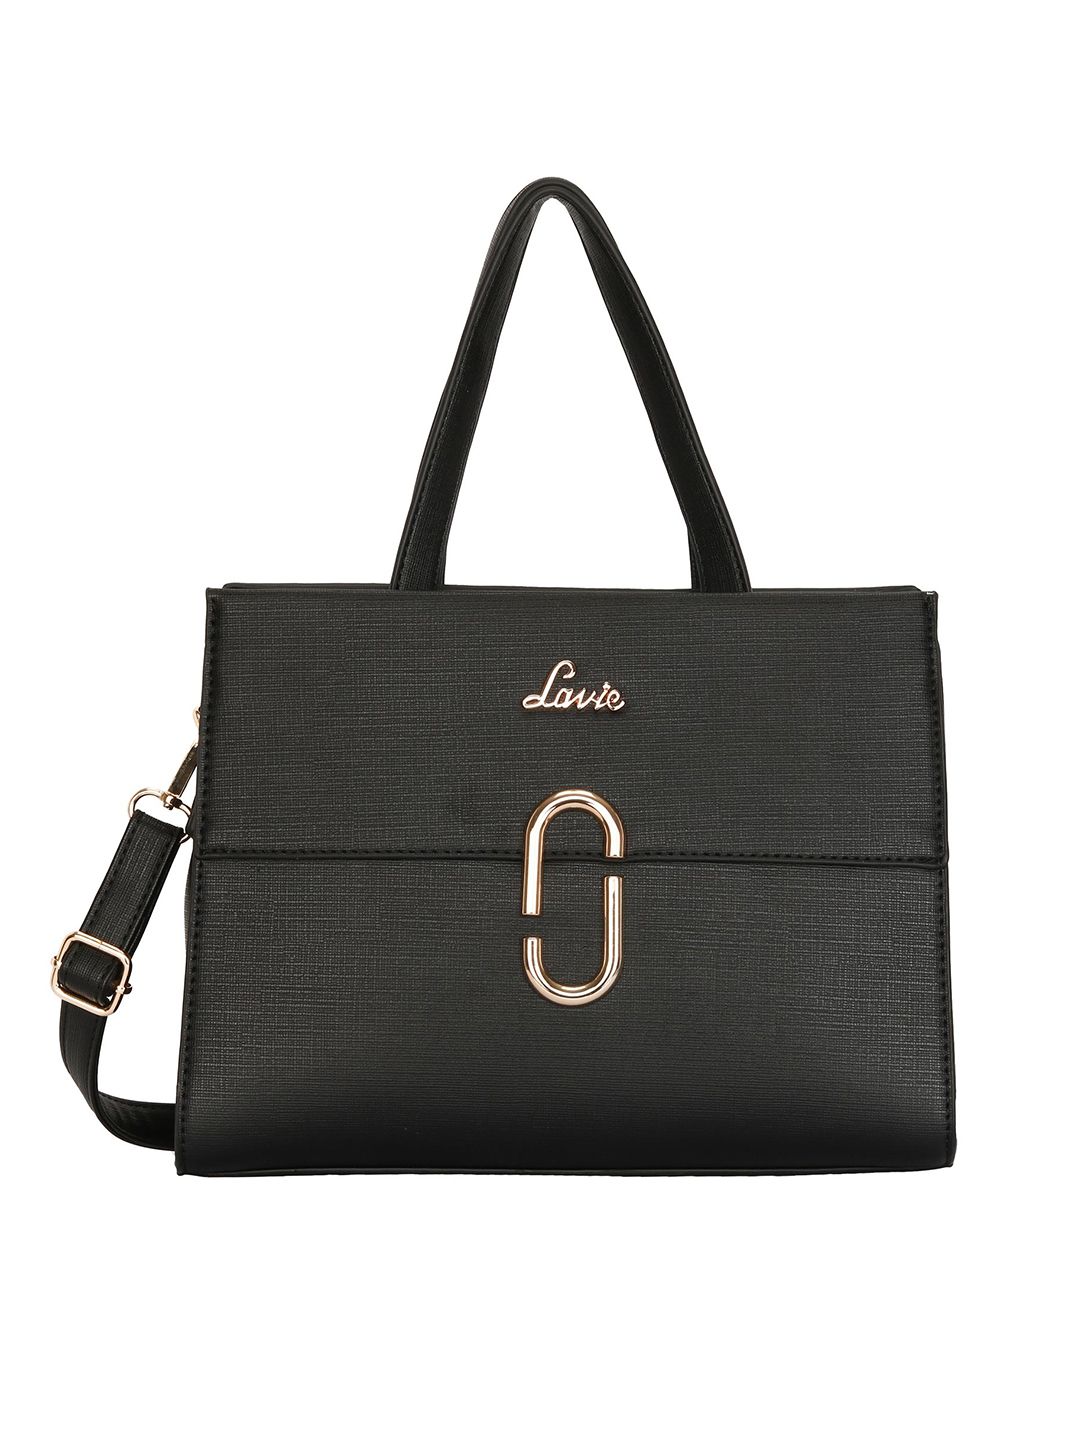 Lavie Black Textured Shoulder Bag Price in India